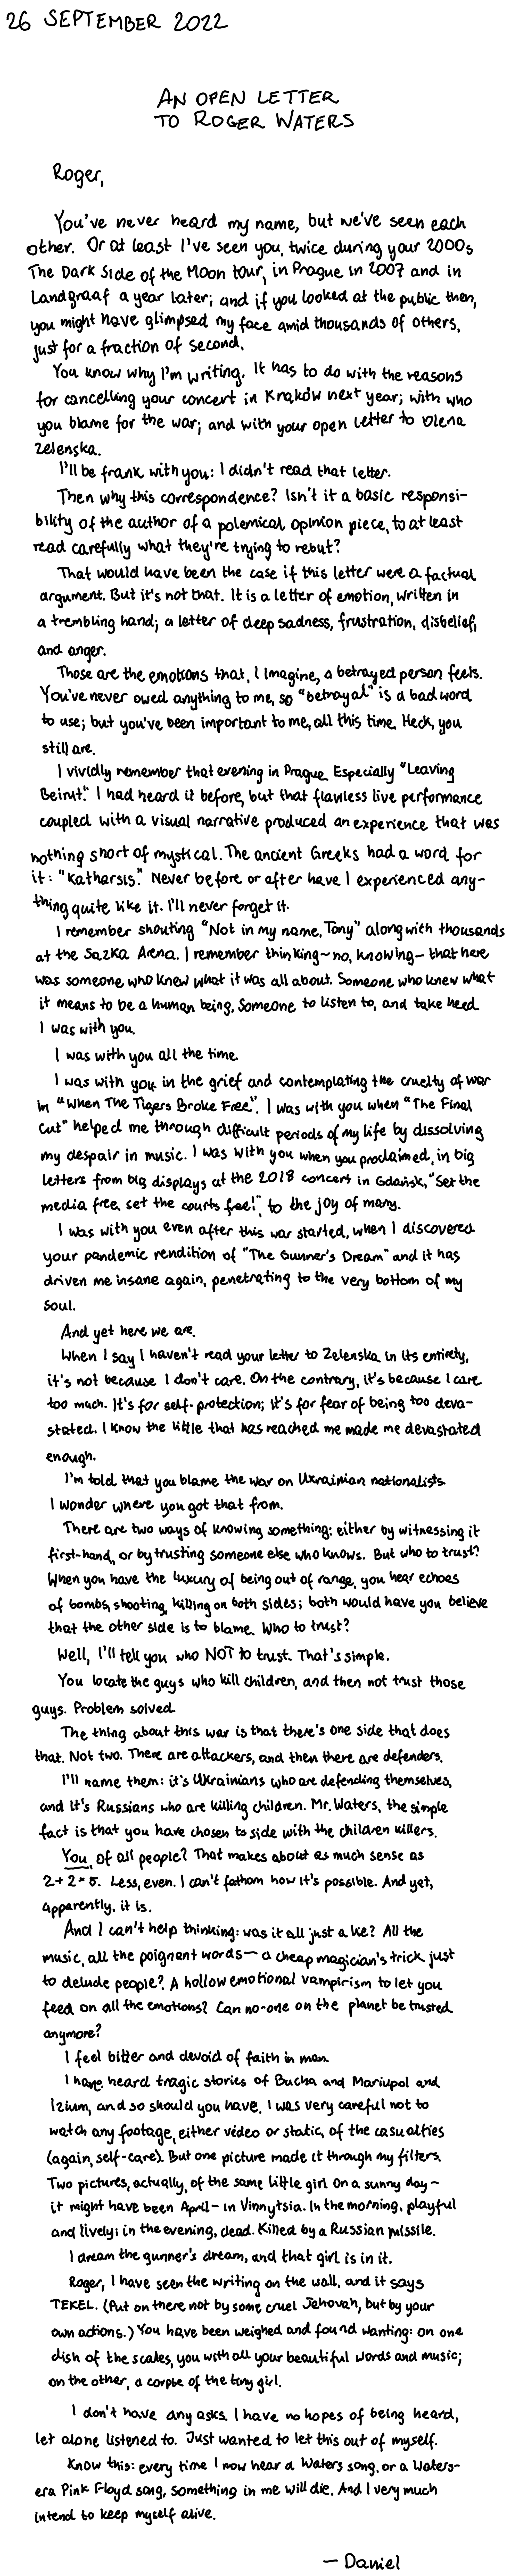 Handwritten post